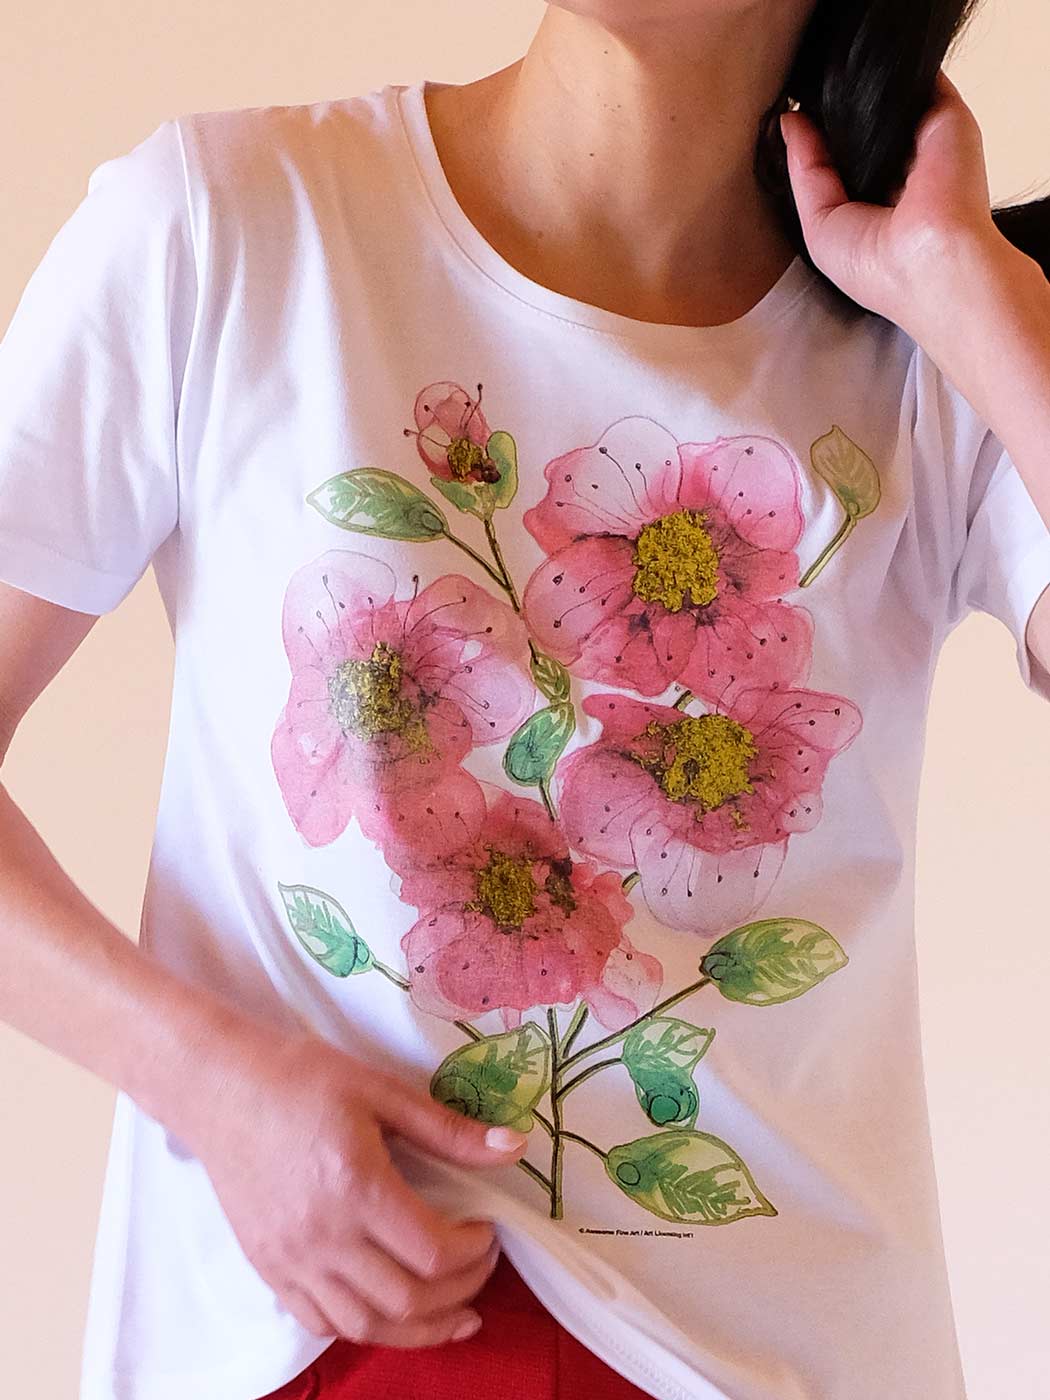 Camiseta Floral Bouquet 100% algodón